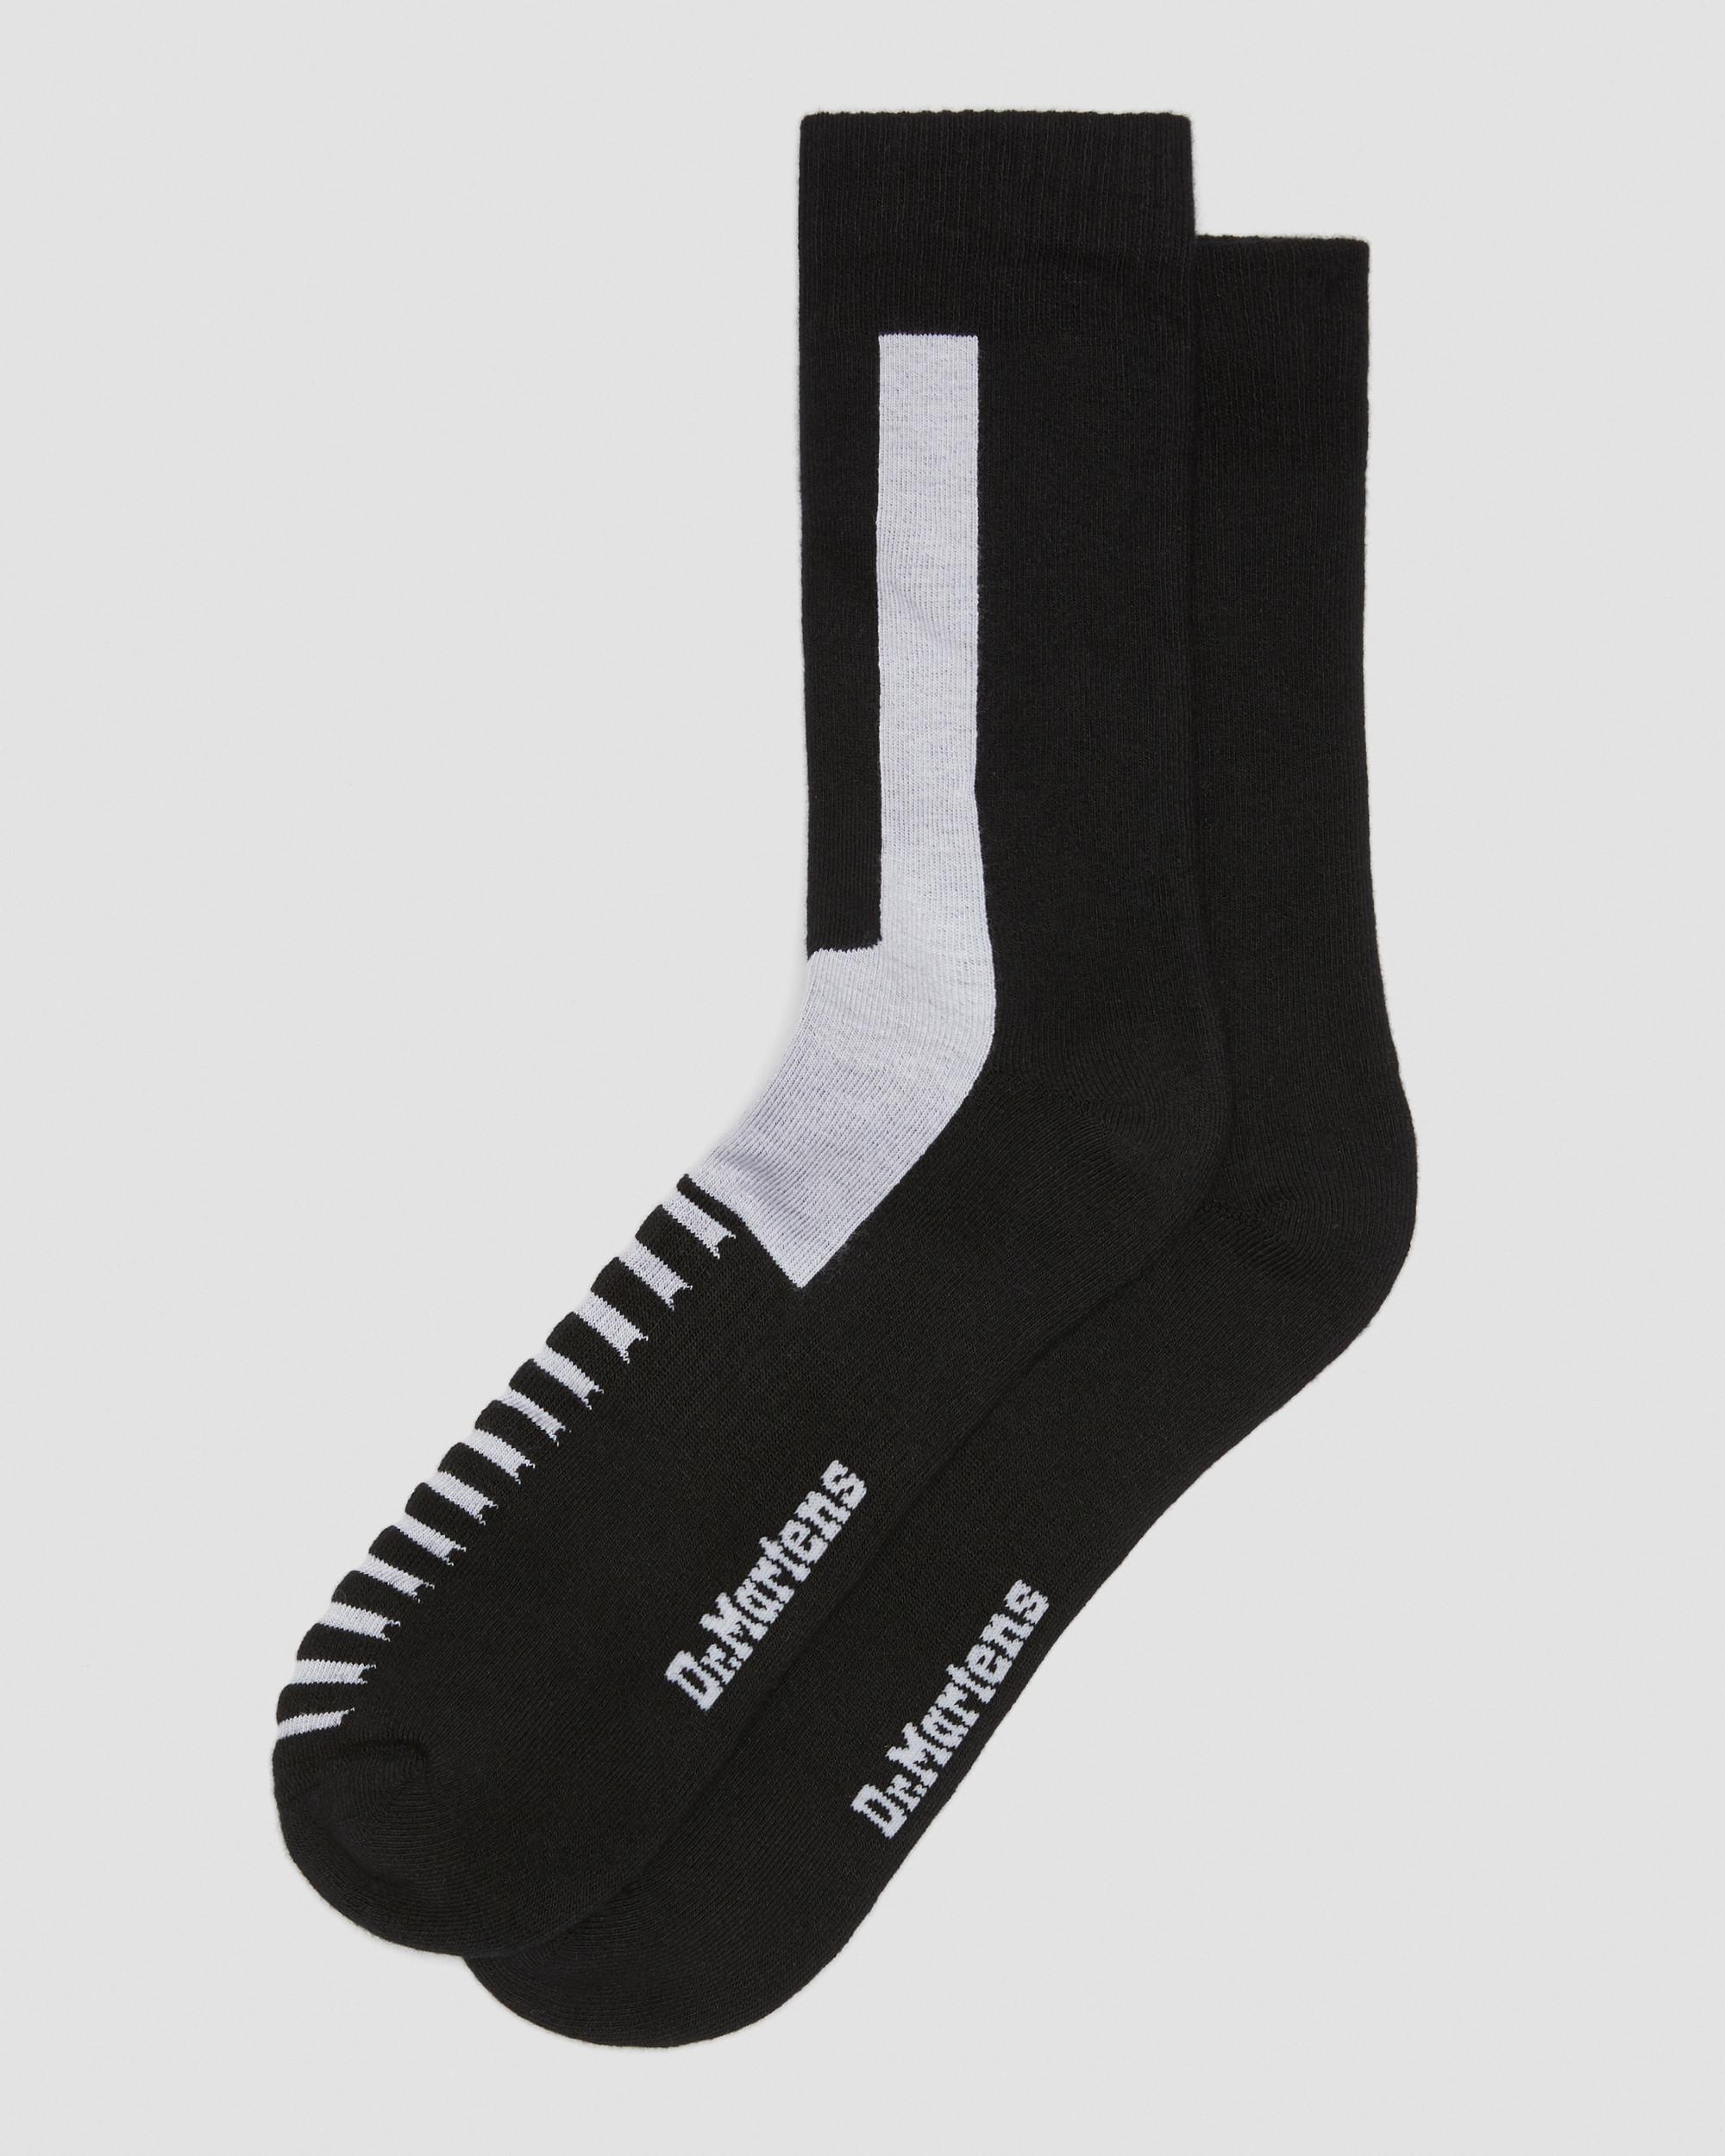 Double Doc Cotton Blend Socks in Black | Dr. Martens